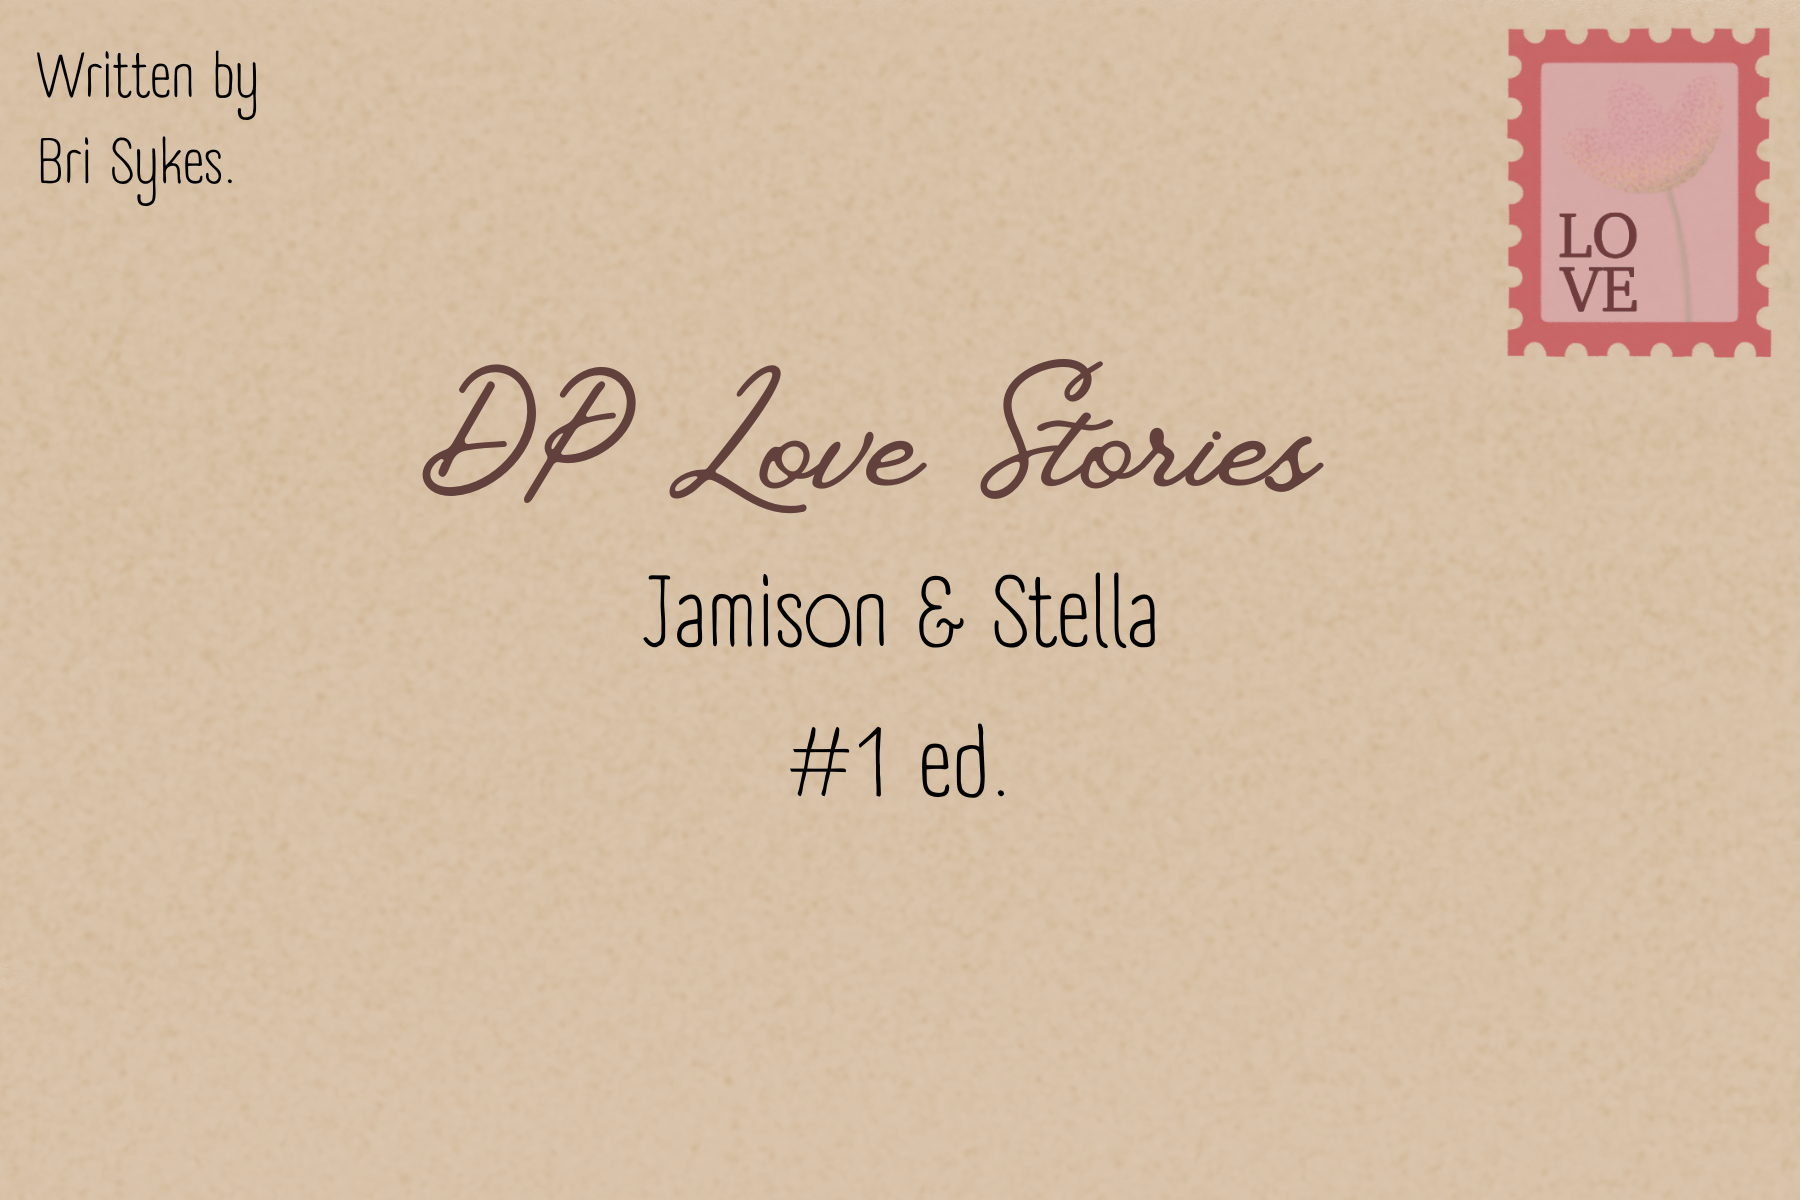 DP Love Stories Ed. #1